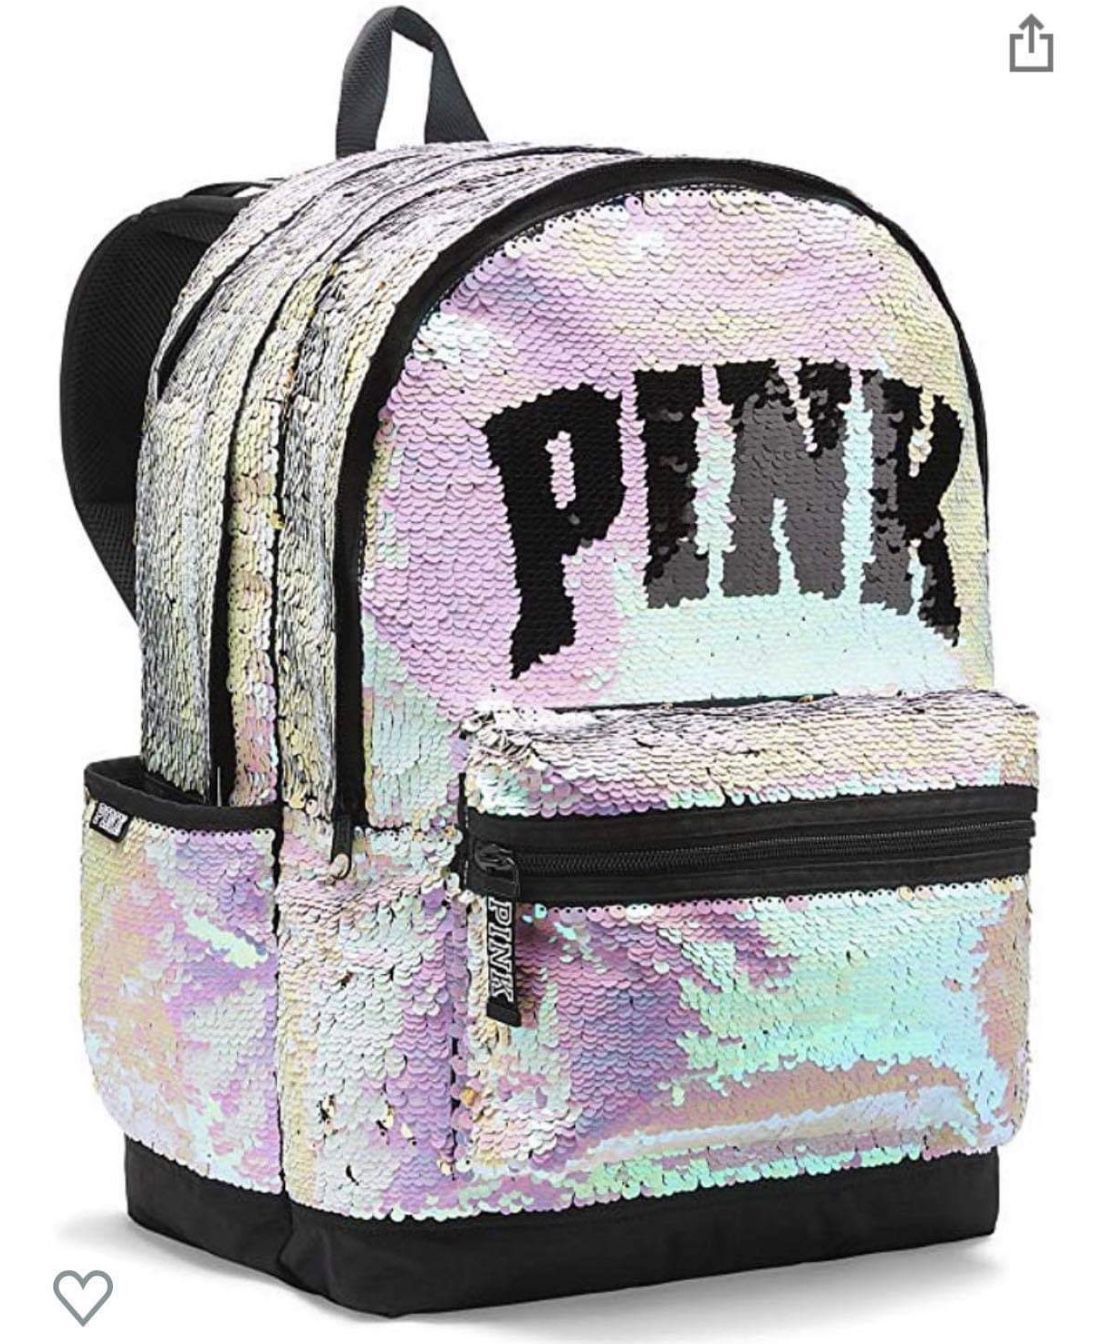 Victoria’s Secret Pink Bling Sequin Full Size Backpack Padded laptop NEW